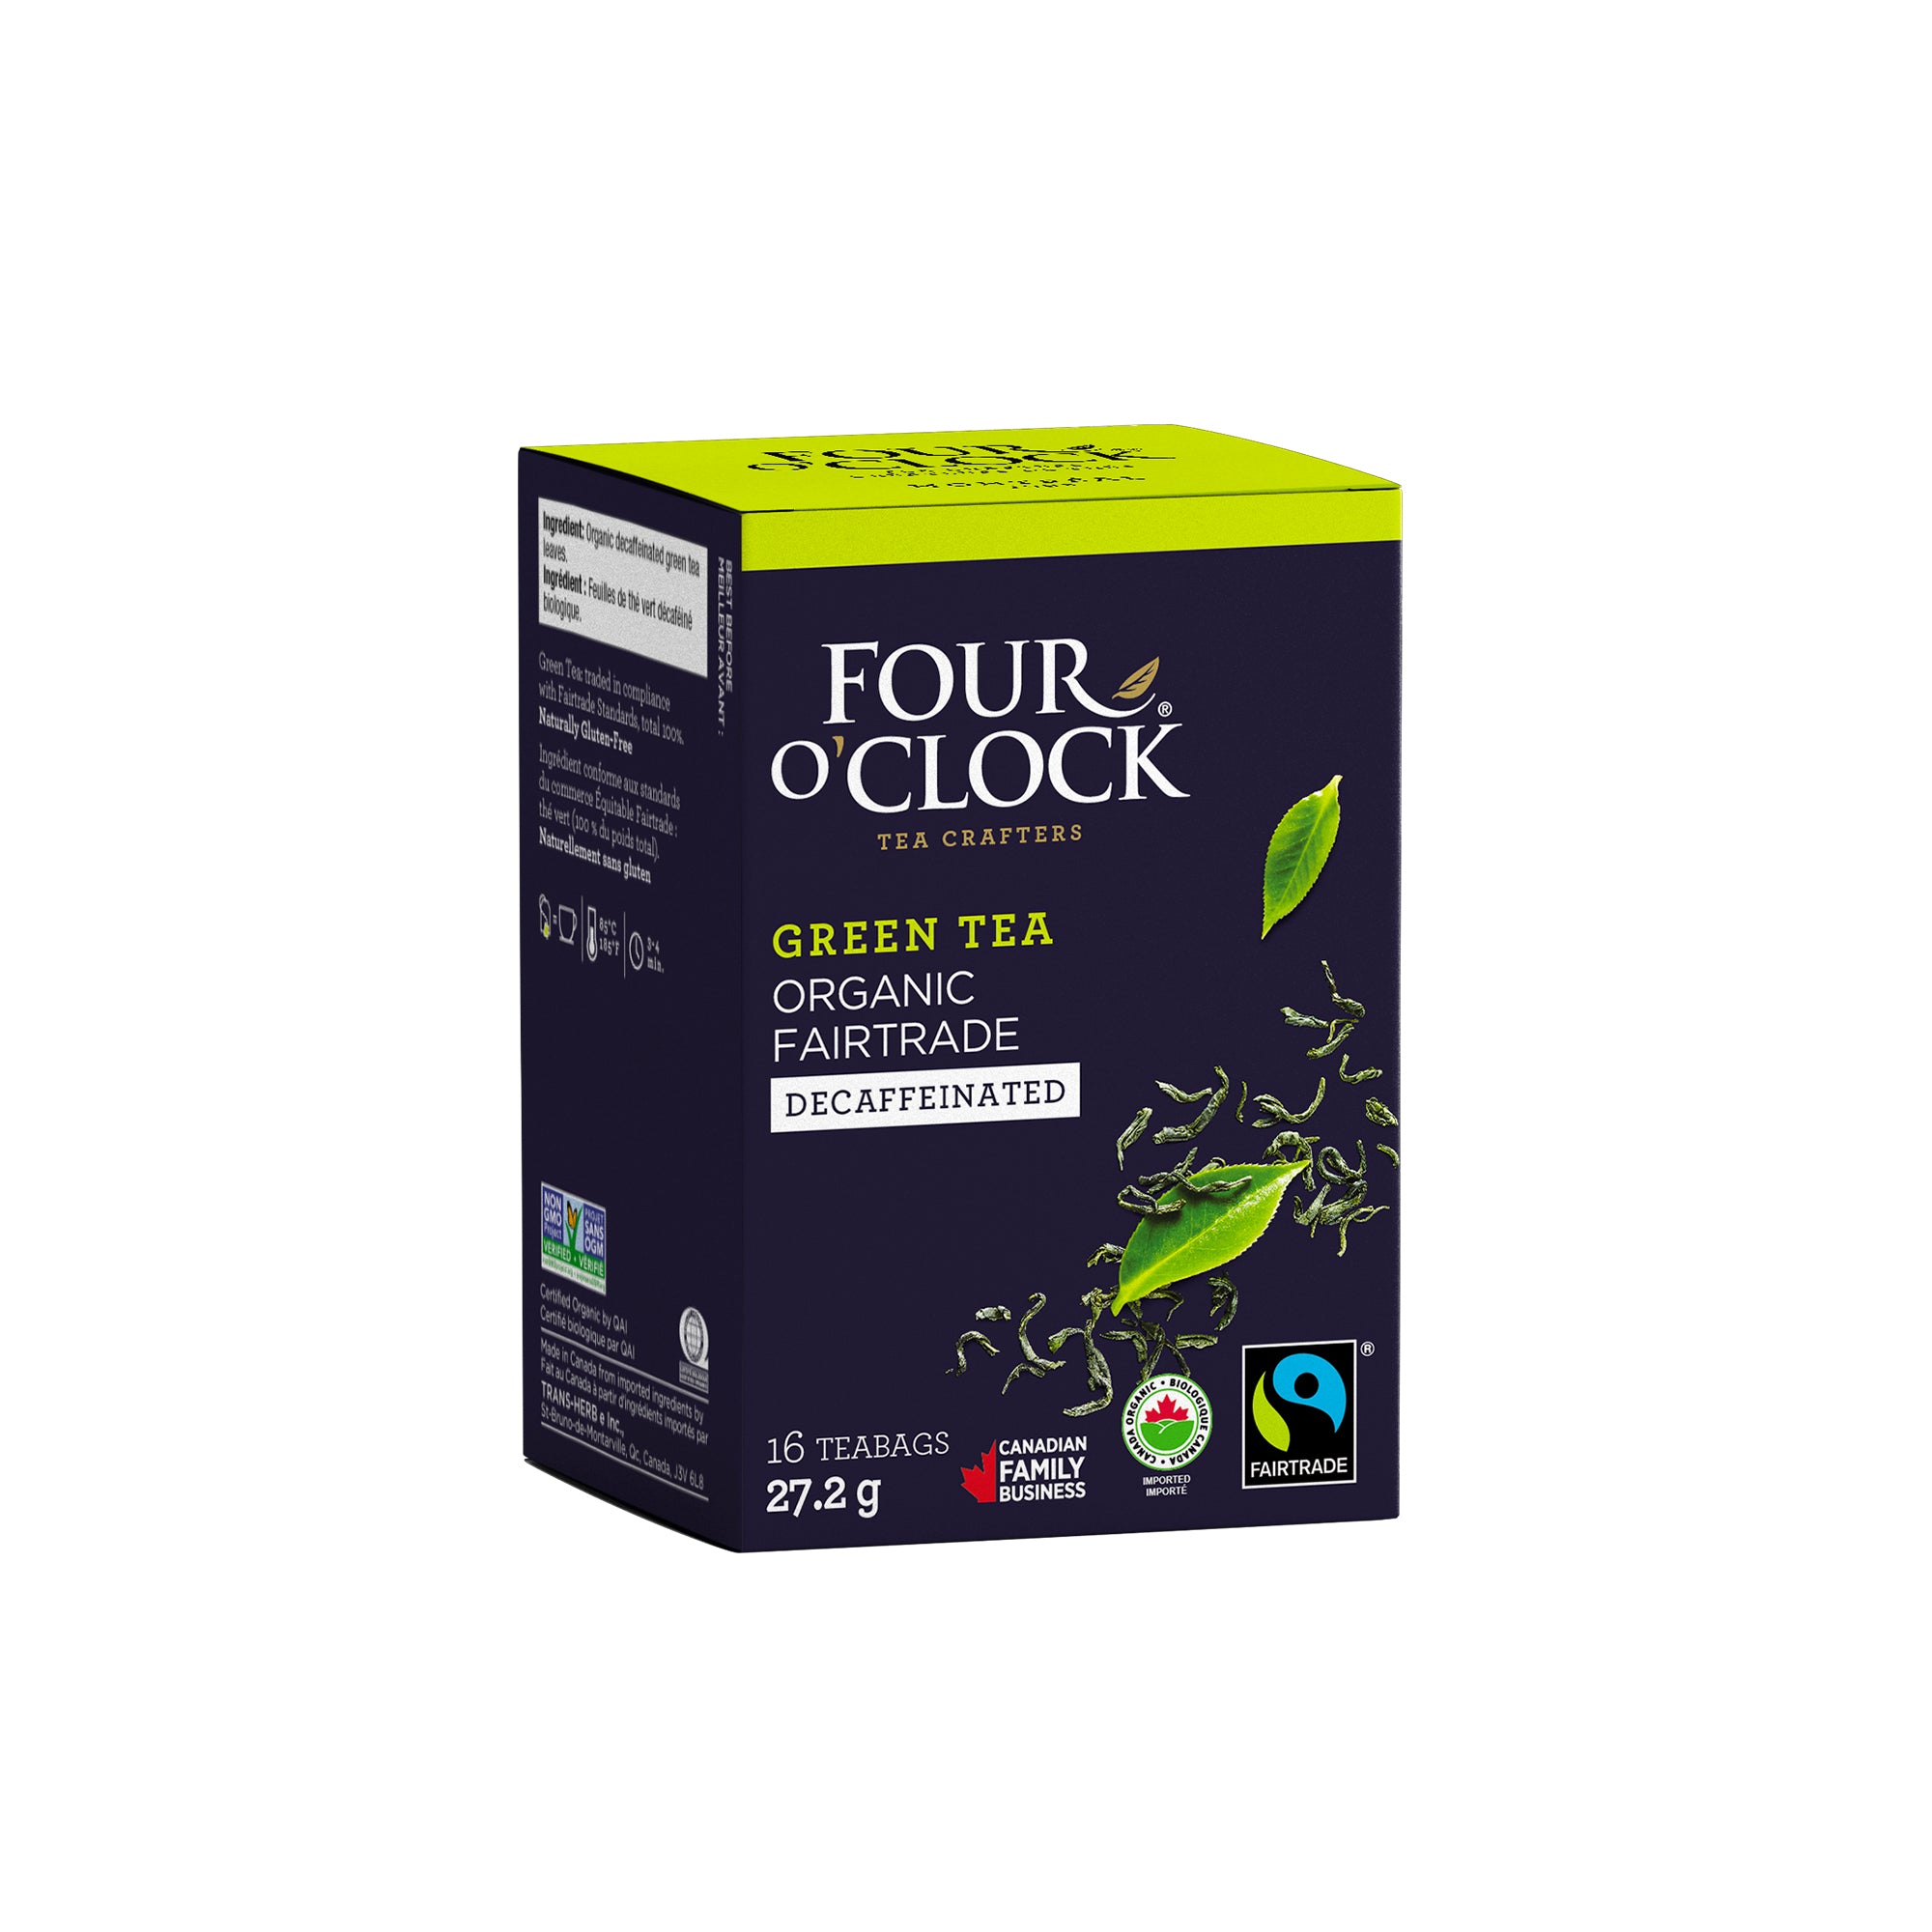 Decaffeinated Organic Fairtrade Green Tea